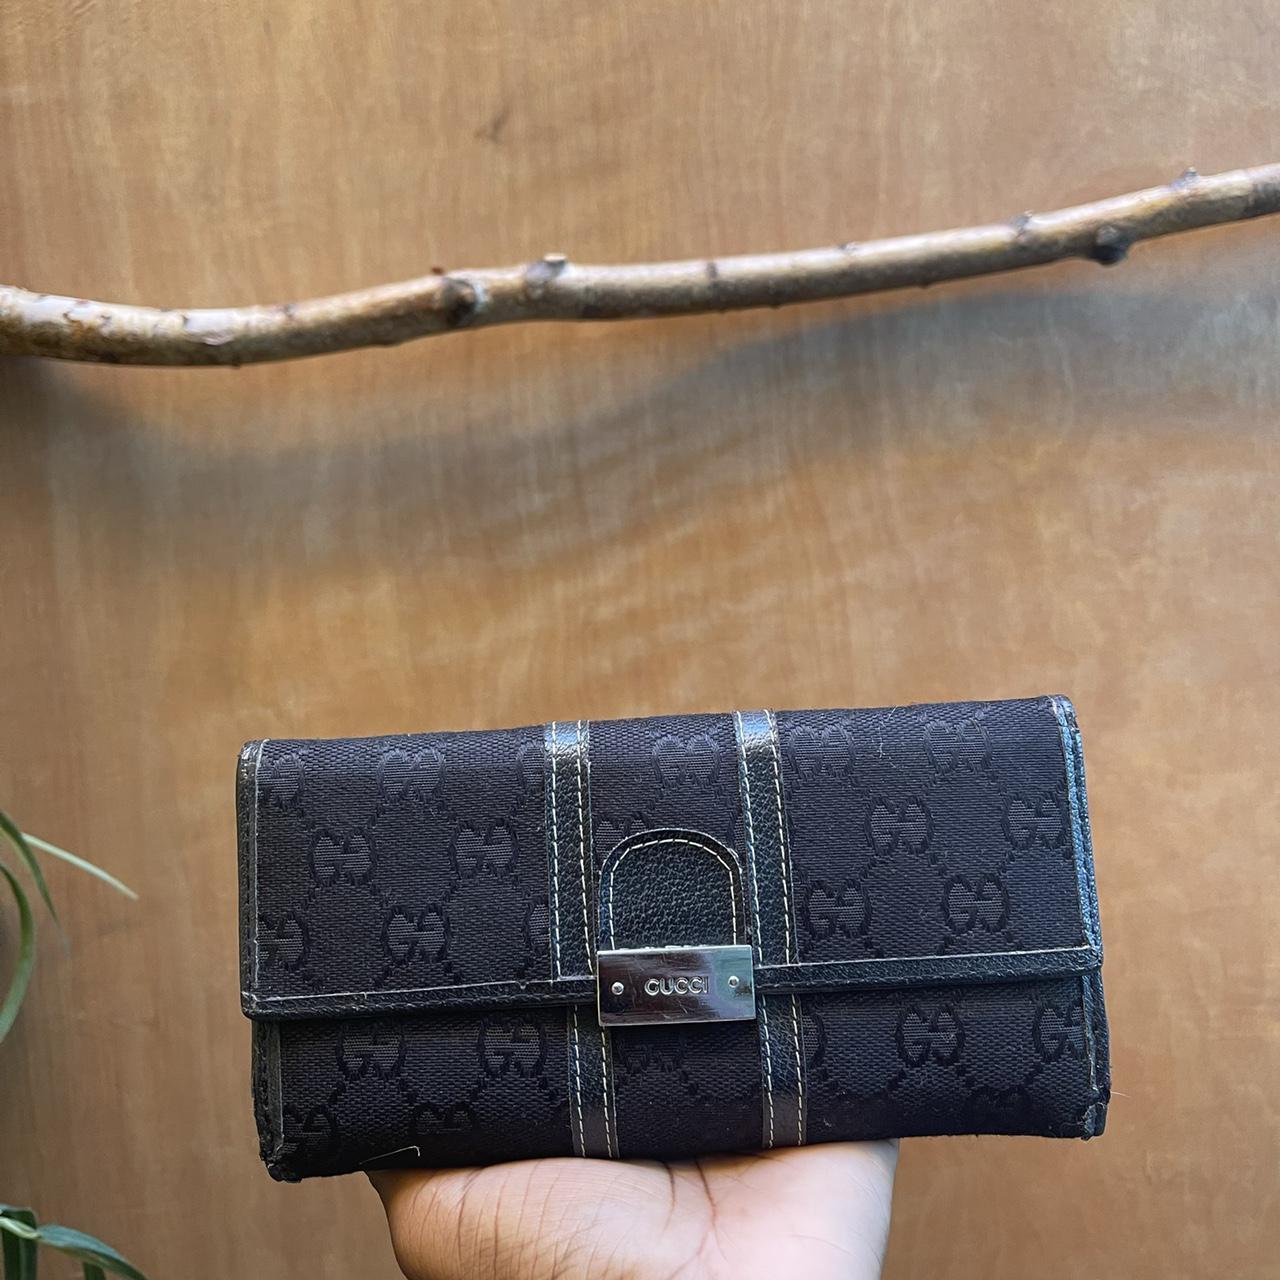 Product Image 1 - Vintage black Gucci Wallet

100% authentic!

Has